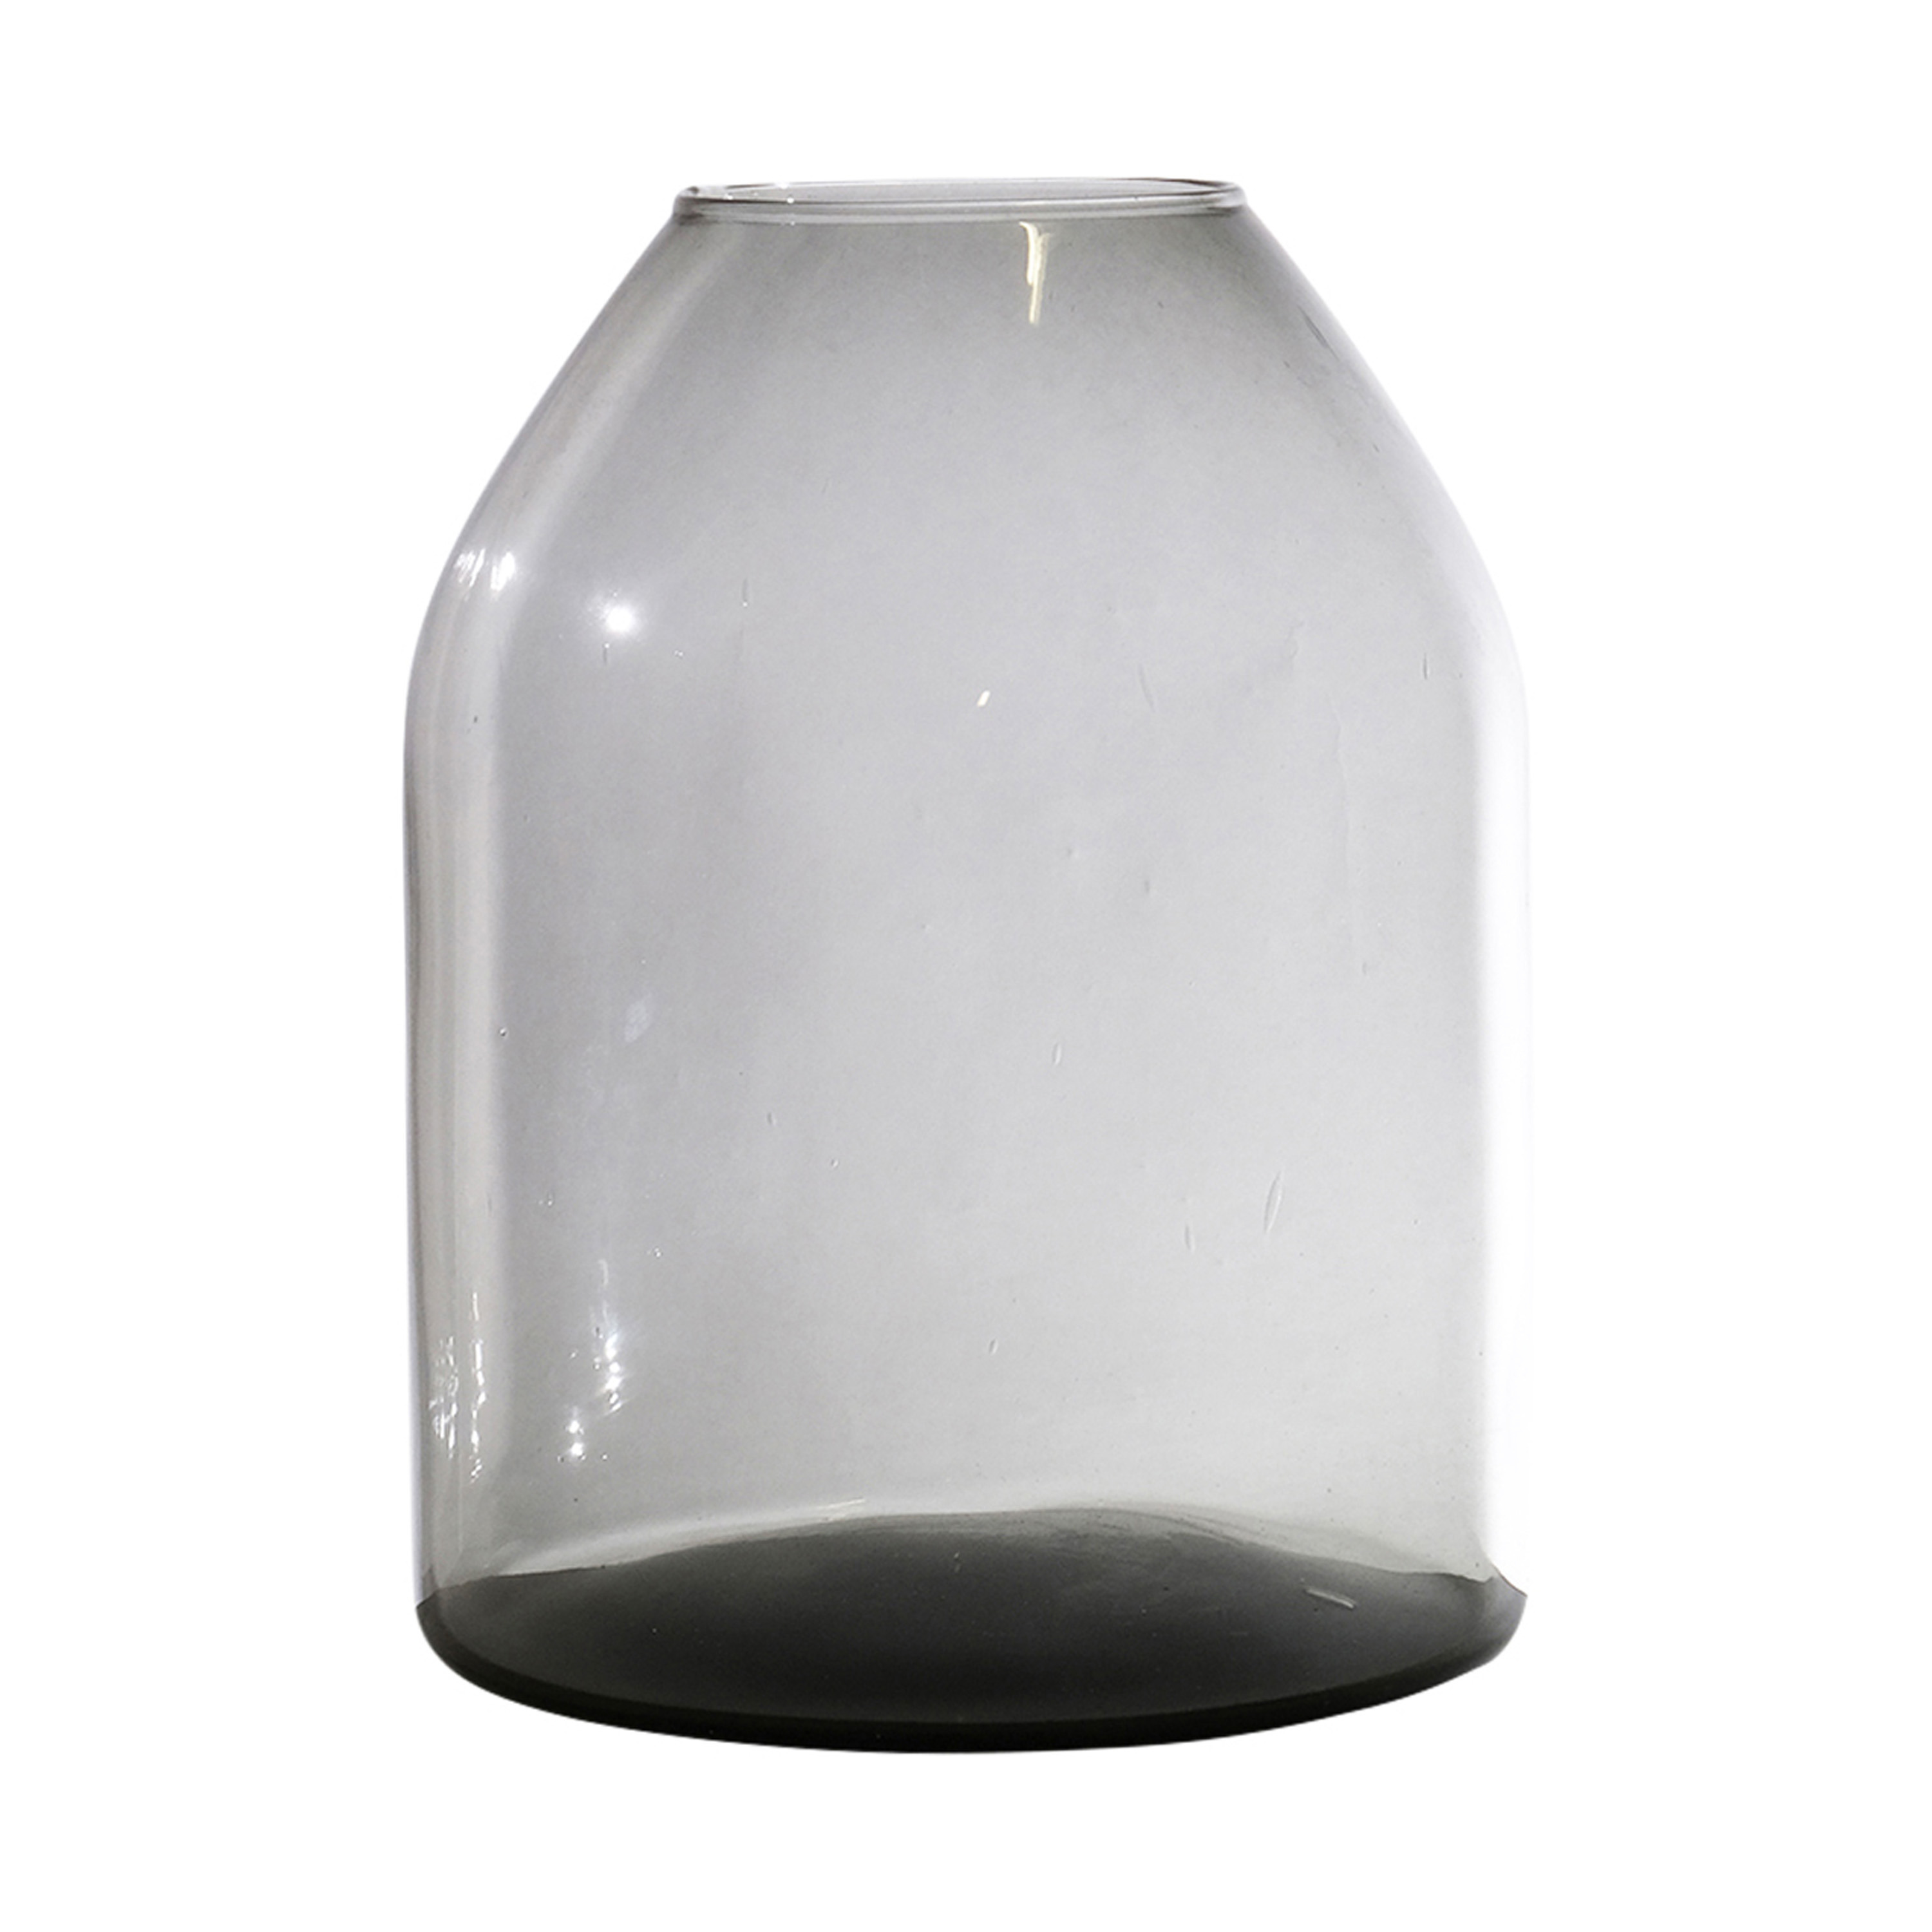 Hakbijl Glass Bloemenvaas Barcelona transparant grijs eco glas D20 x H25 cm smoke glas